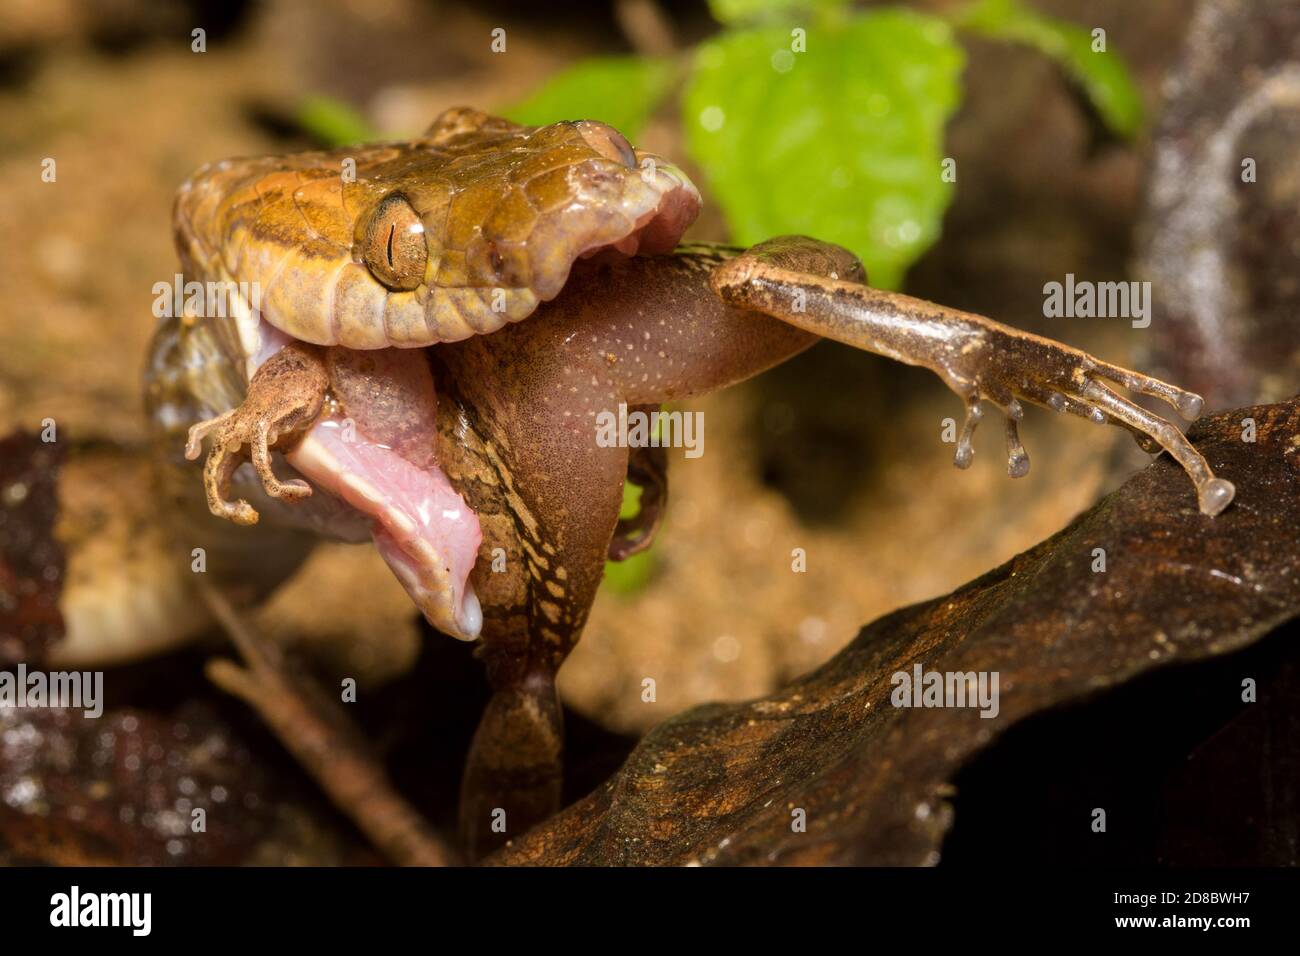 a wild cat eyed snake (leptodeira septentrionalis) swalling a Pristimantis frog Stock Photo